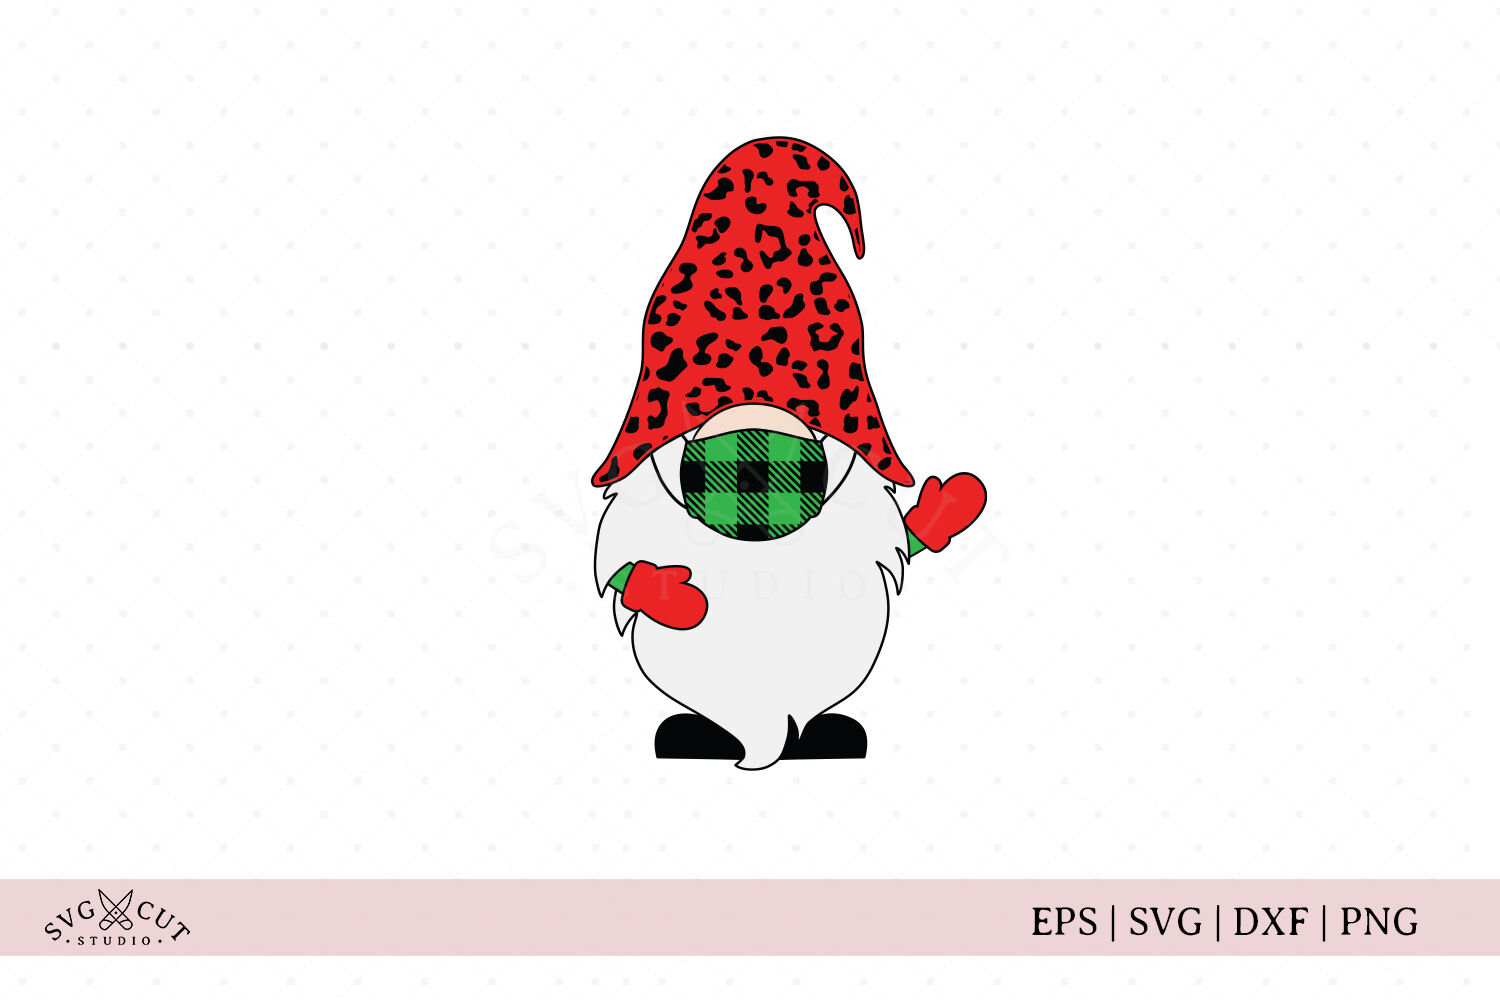 Download Christmas Gnome Svg Plaid Mask Gnome Svg Files By Svg Cut Studio Thehungryjpeg Com